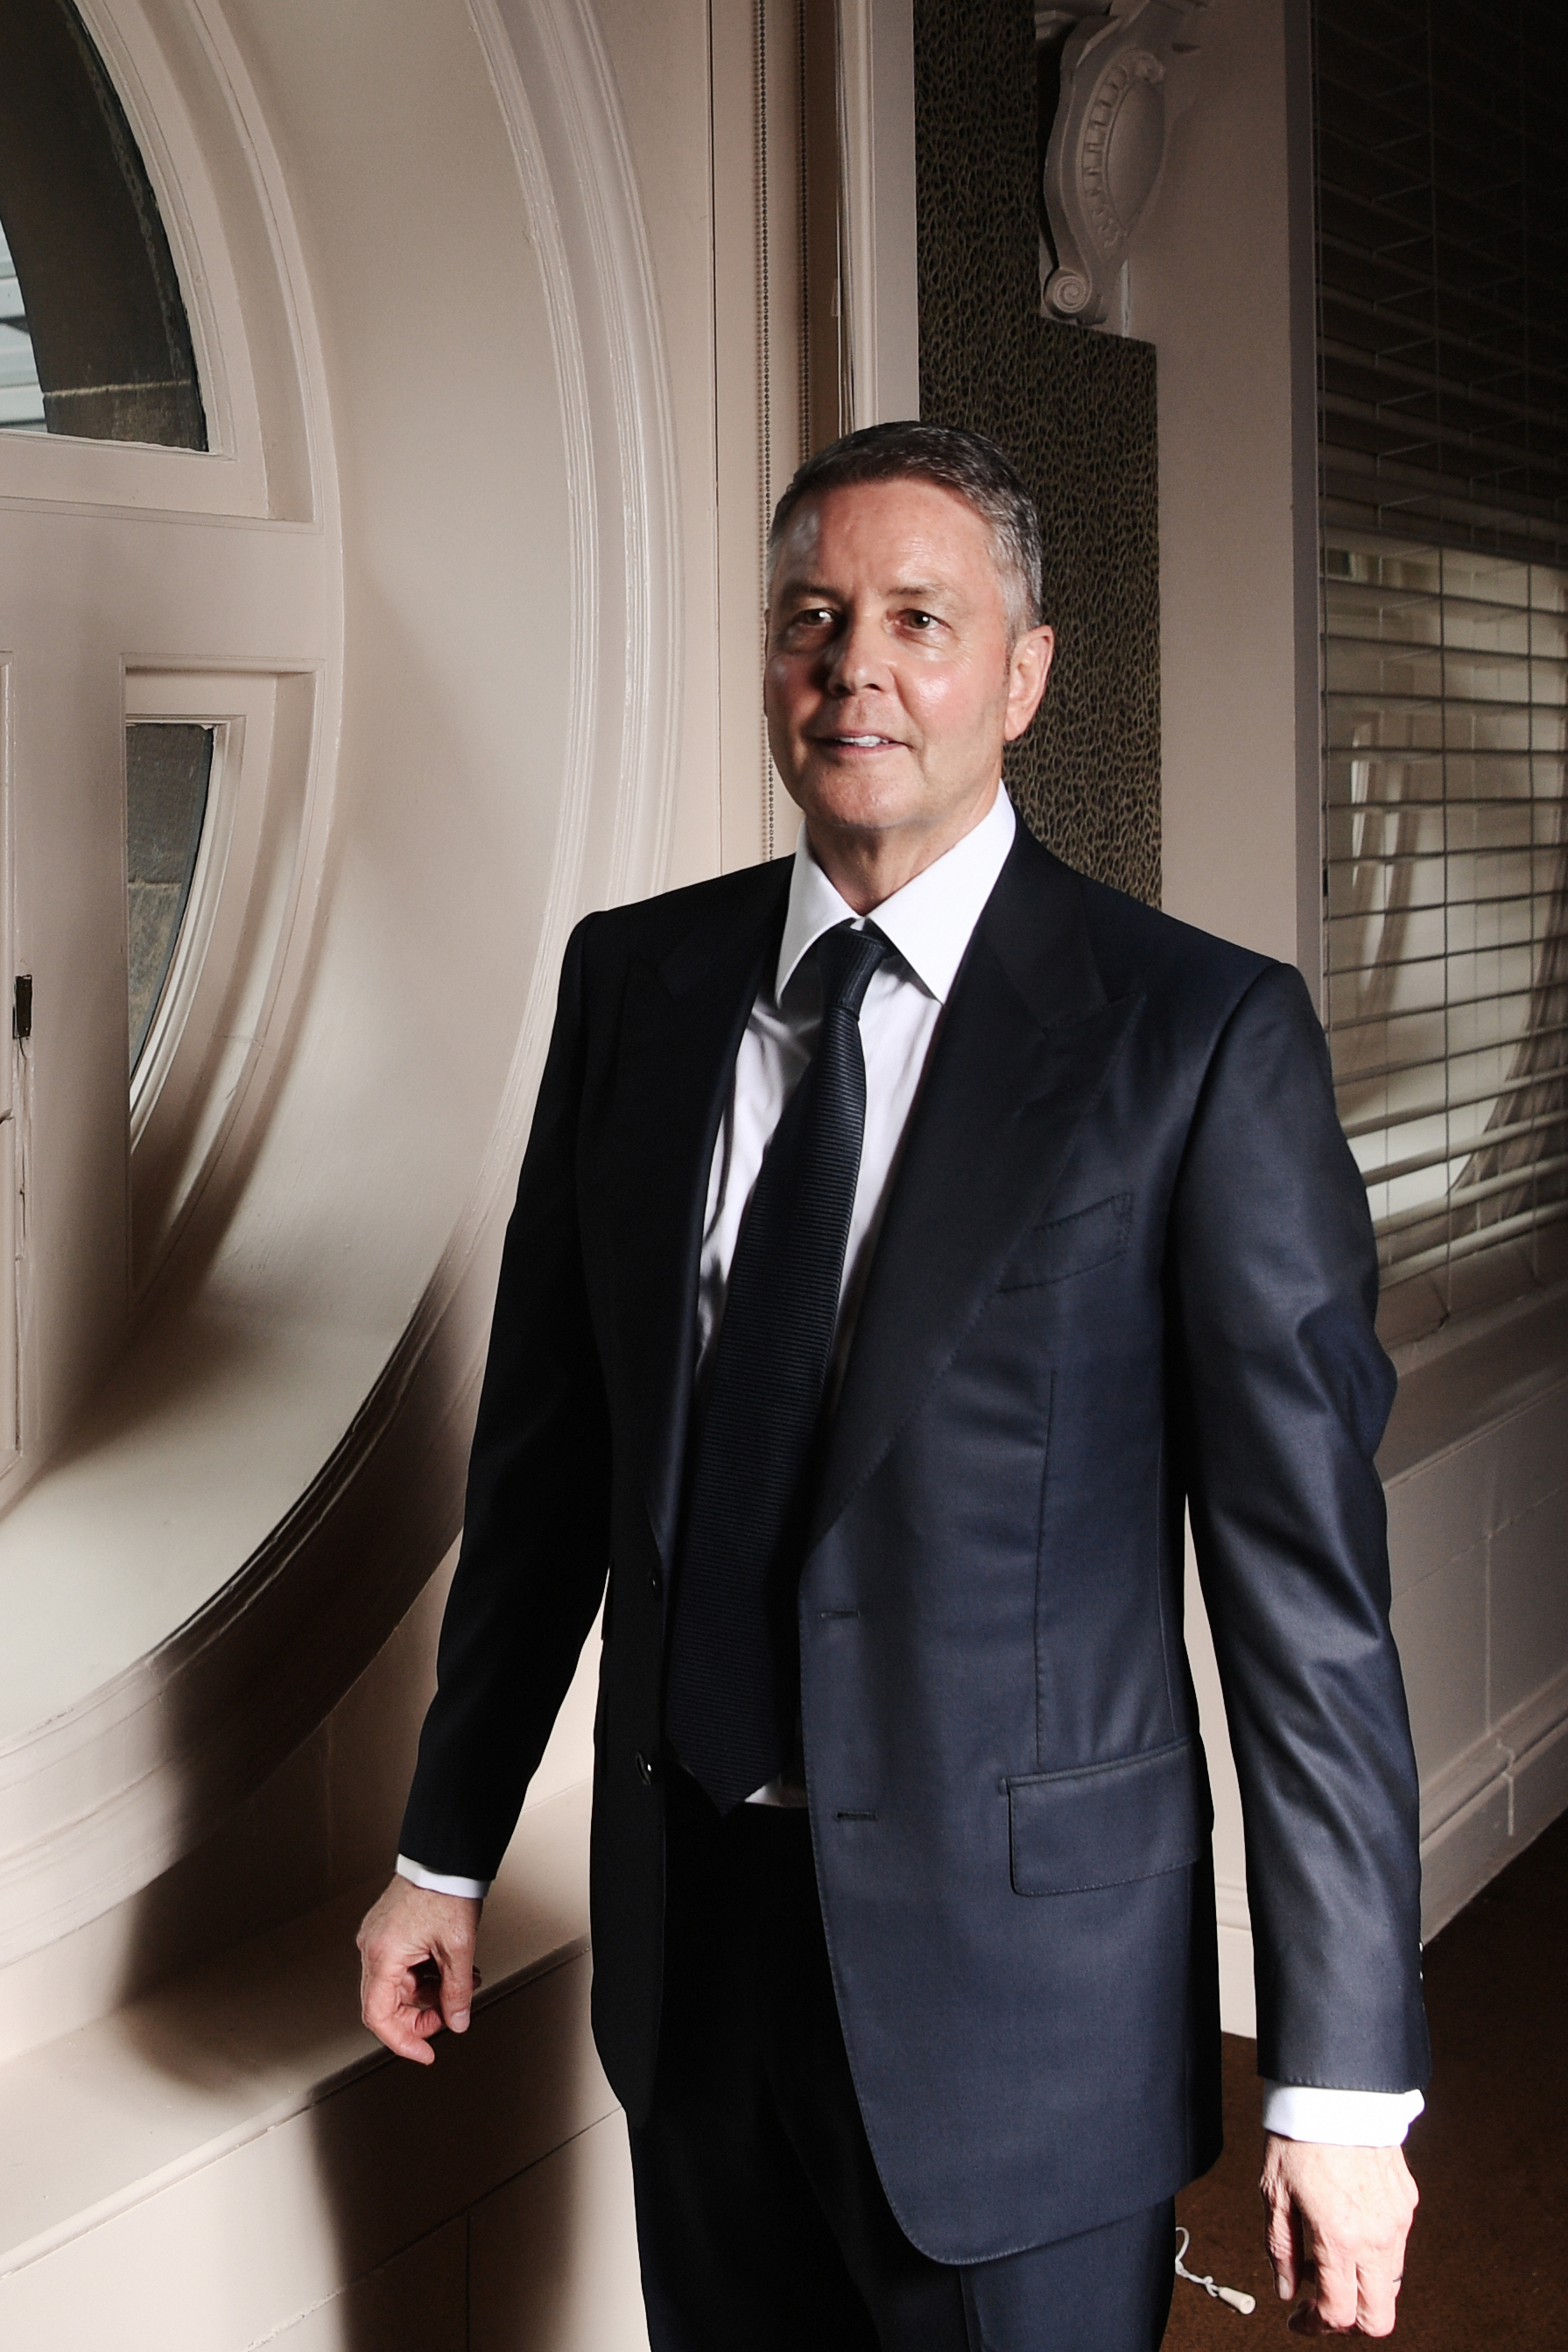 Lovisa CEO earns millions more than top ASX executives